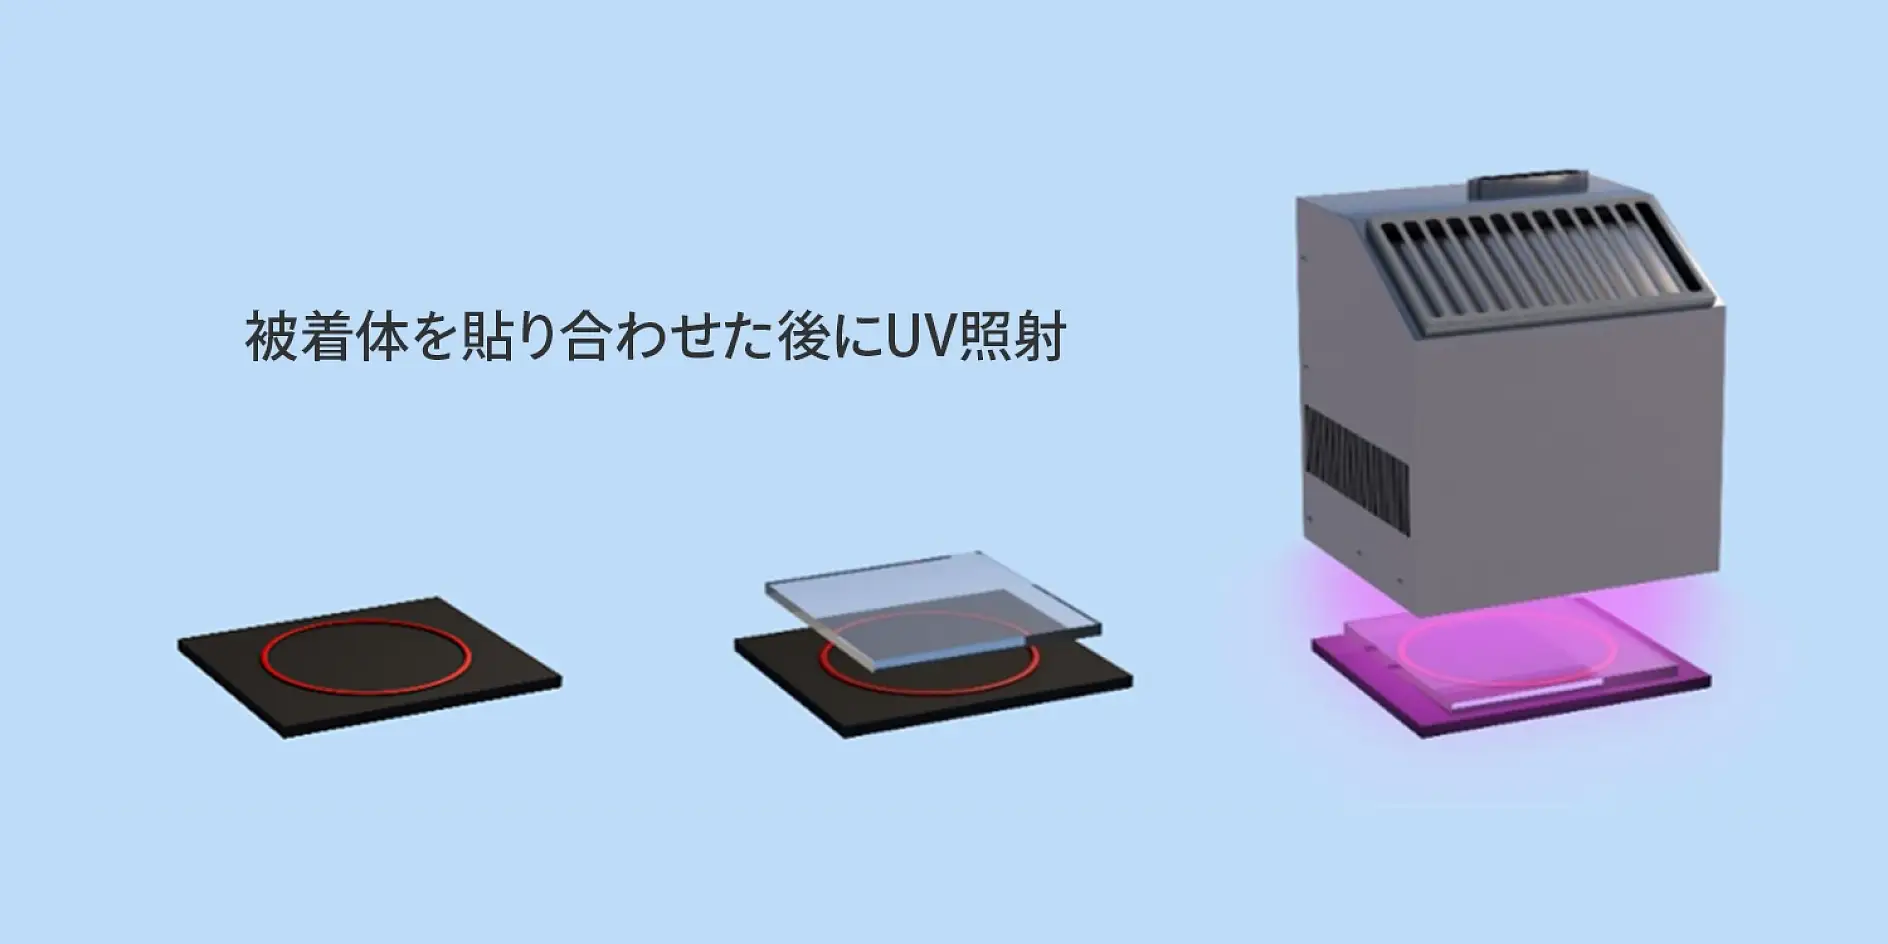 tesa® UV硬化型テープ 貼り合わせ後にUV照射する方法